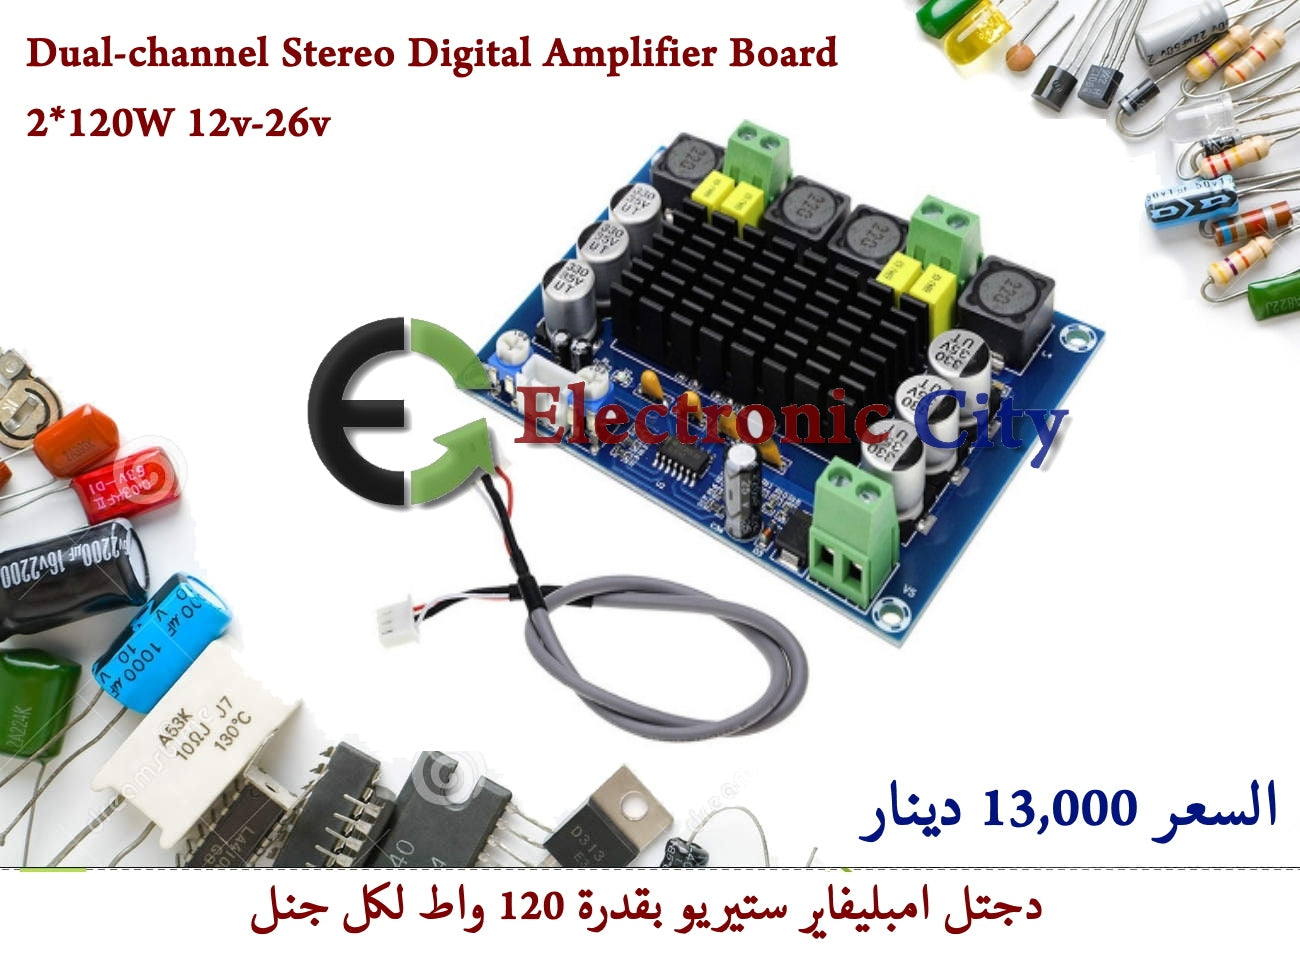 Dual-channel Stereo Digital Amplifier Board 2X120W 12v-26v #L2 011960